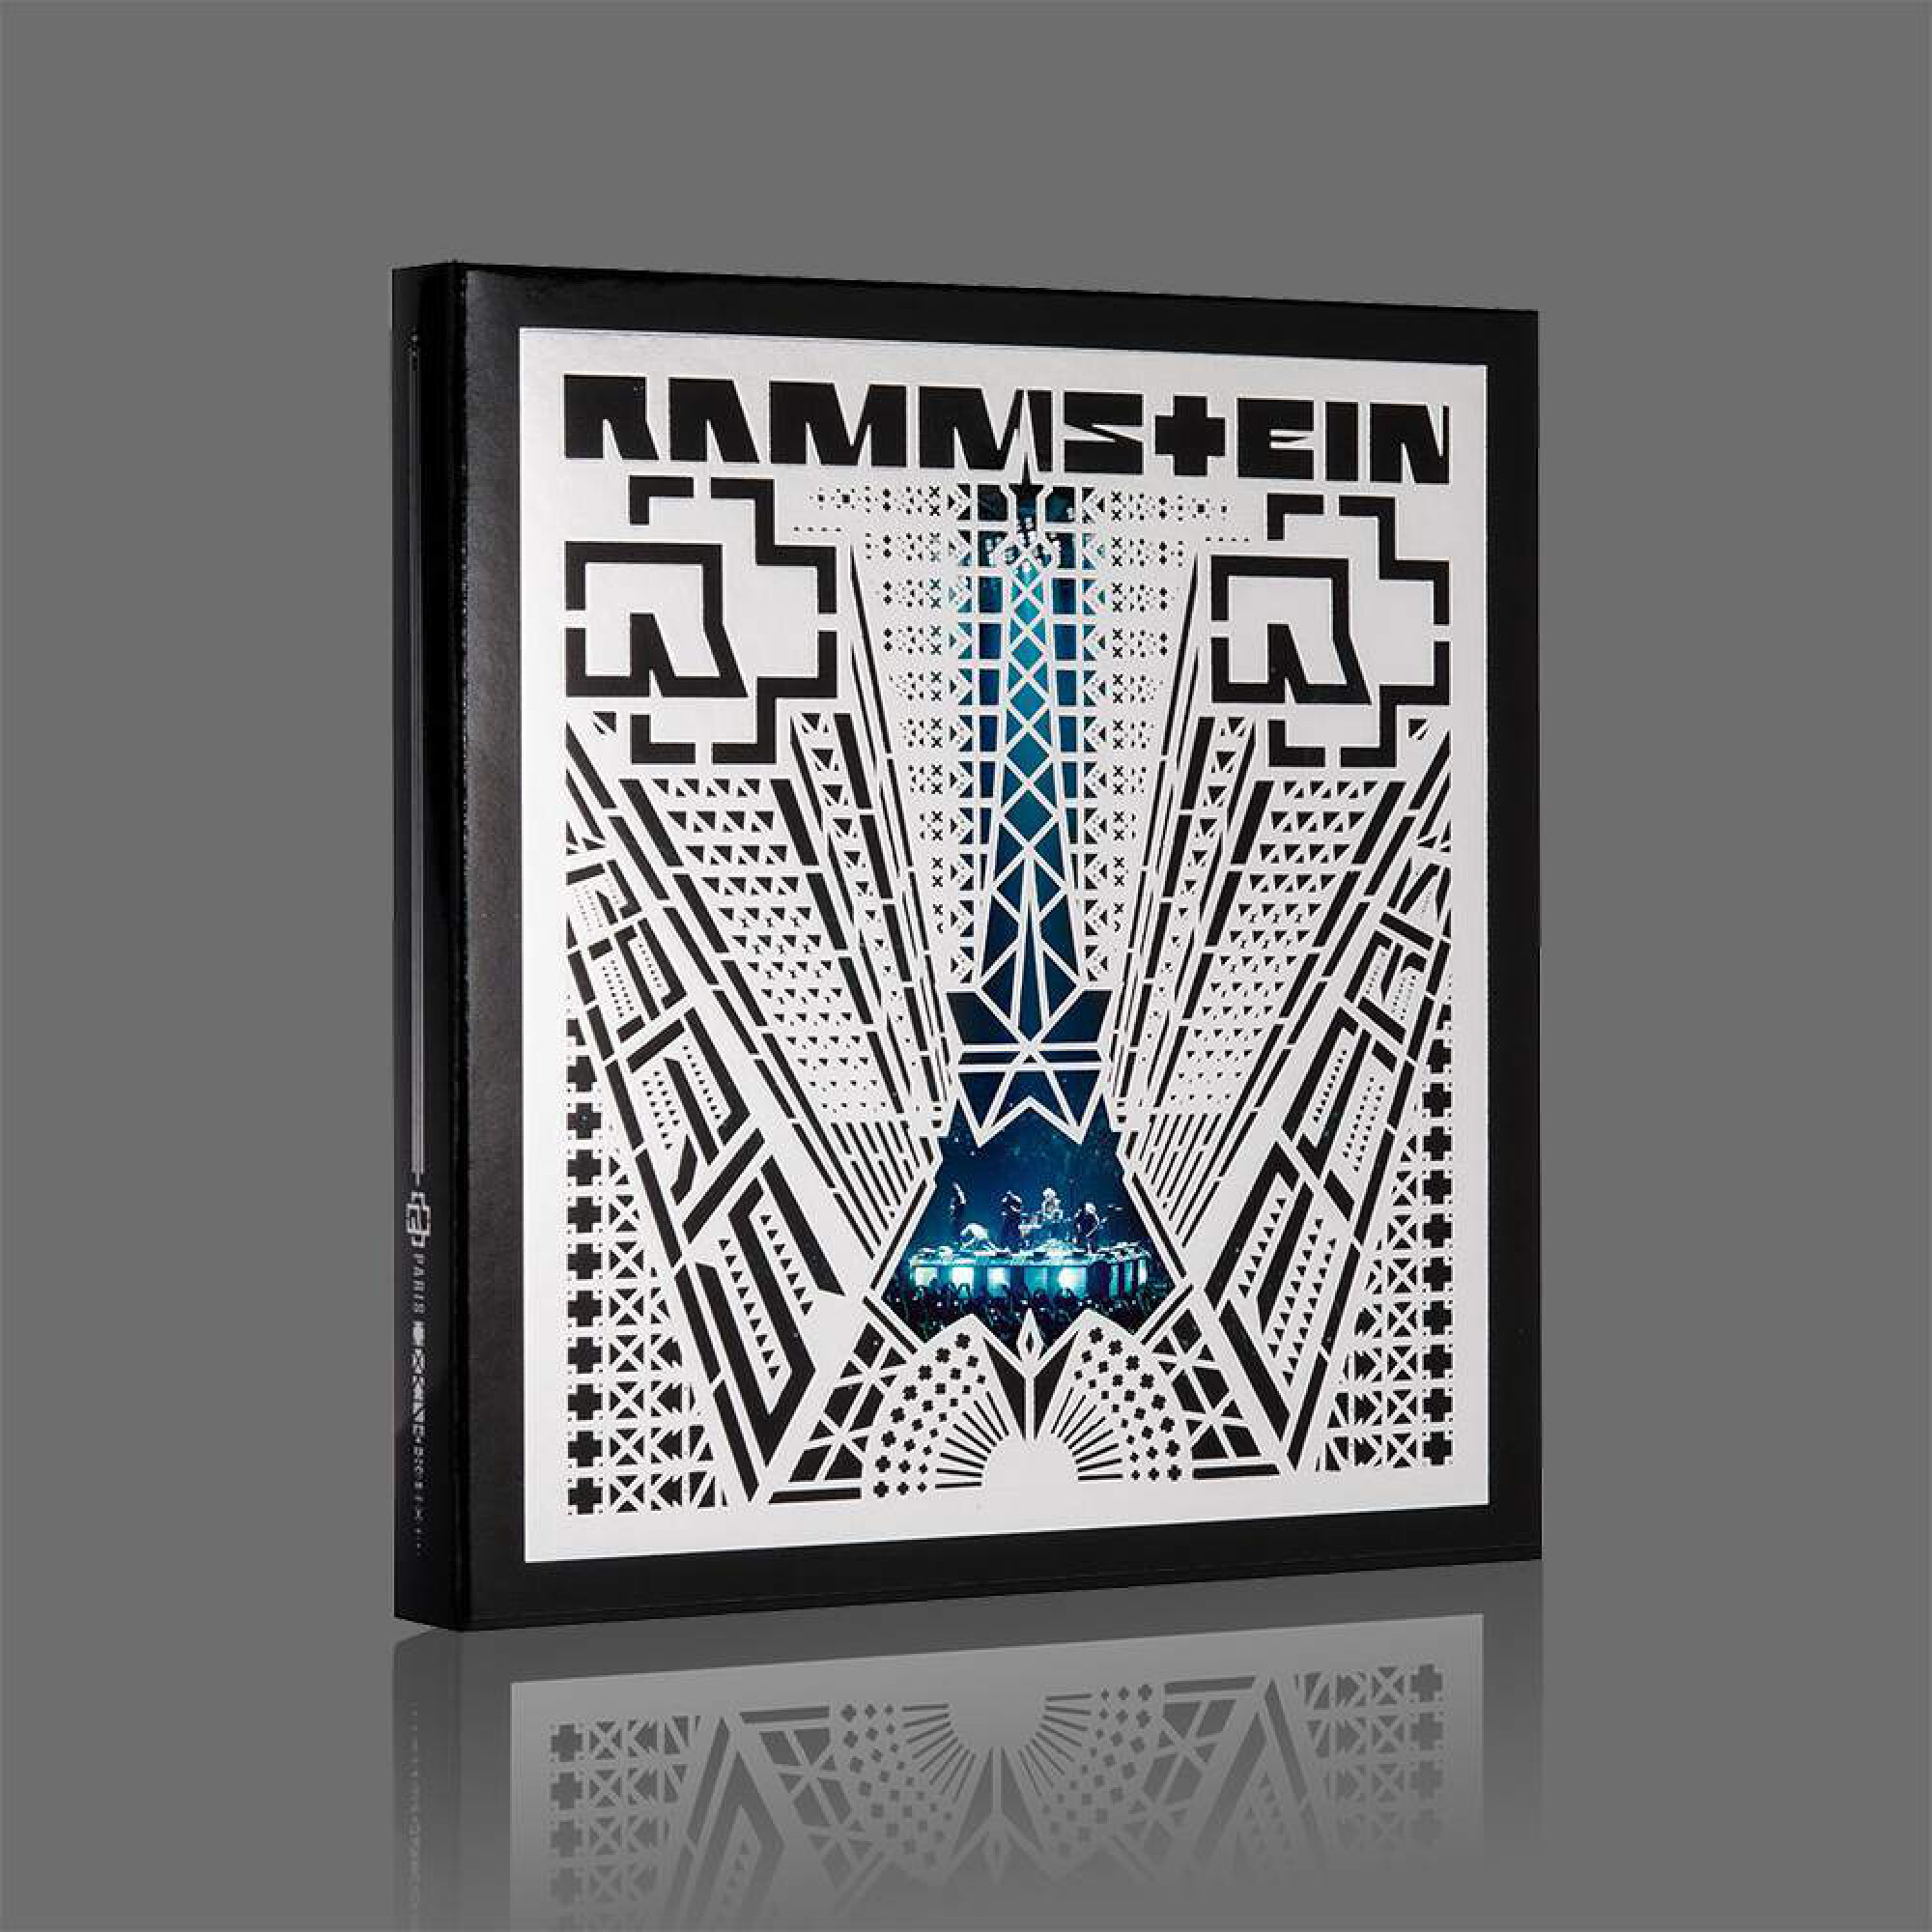 Rammstein Concert Album ”Rammstein: Paris”, CD